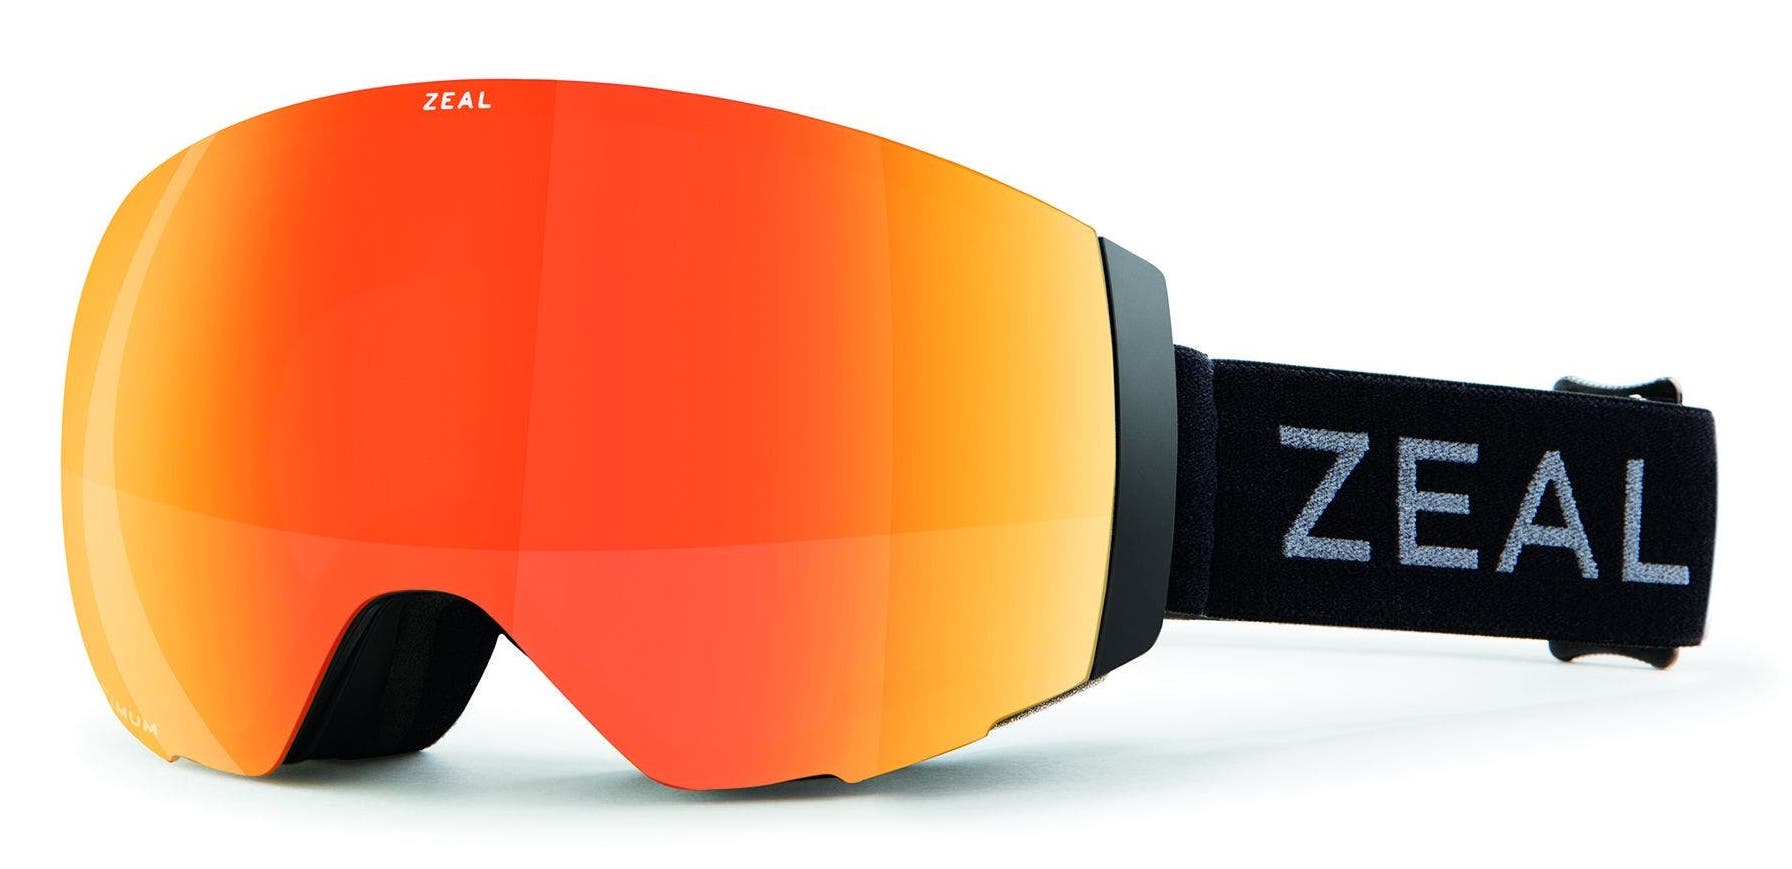 Zeal Optics Portal snow goggle in dark night black with phoenix red orange mirror shield lens.